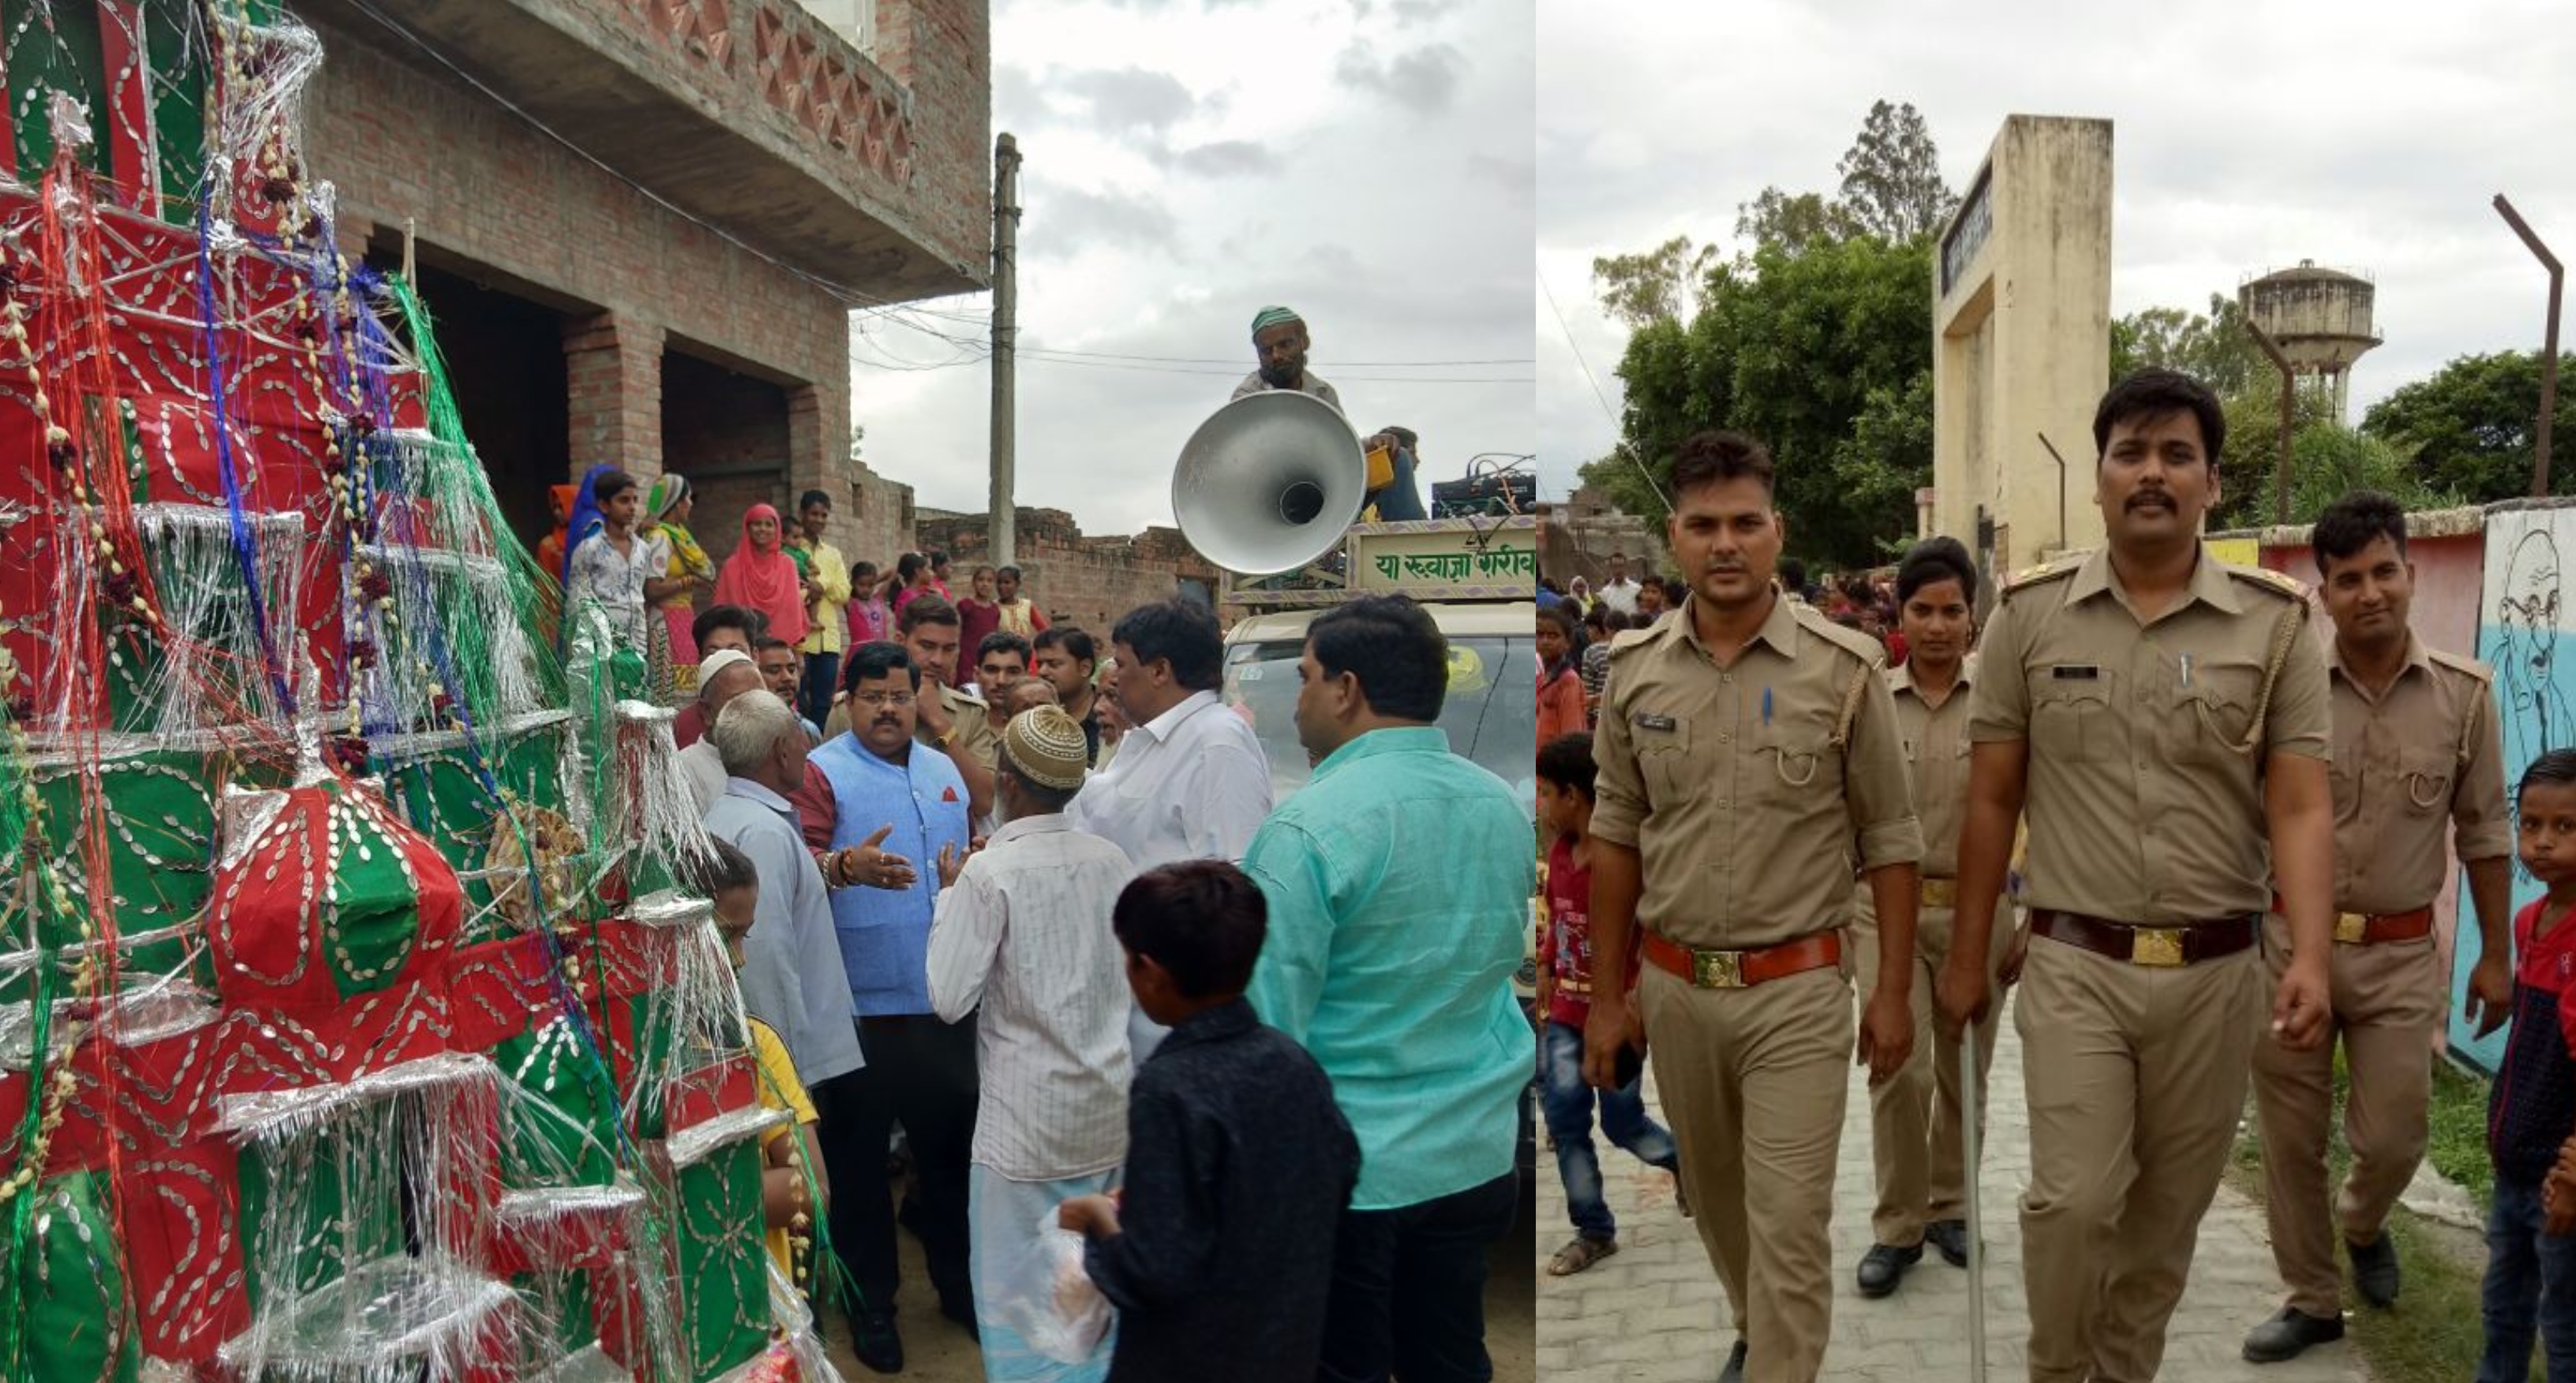 Religious unity seen in Muharram procession police alert